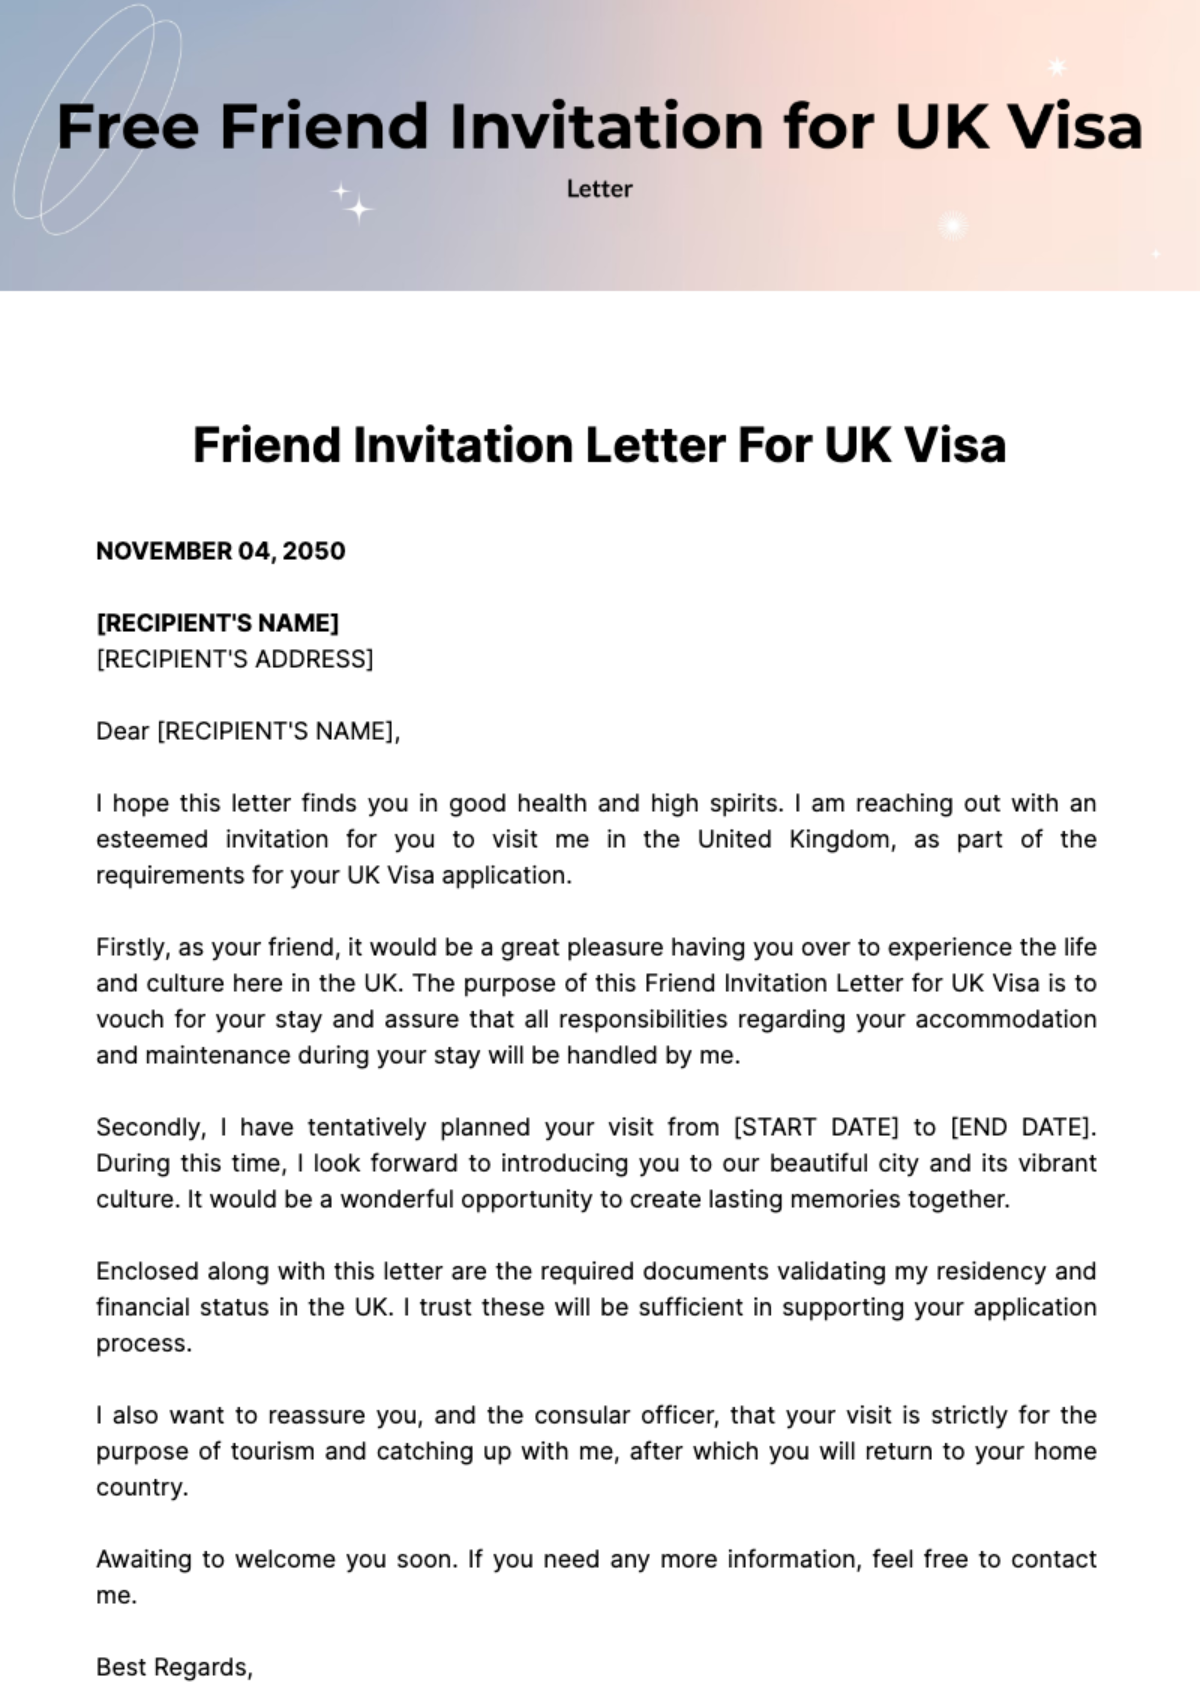 Free Friend Invitation Letter for UK Visa Template